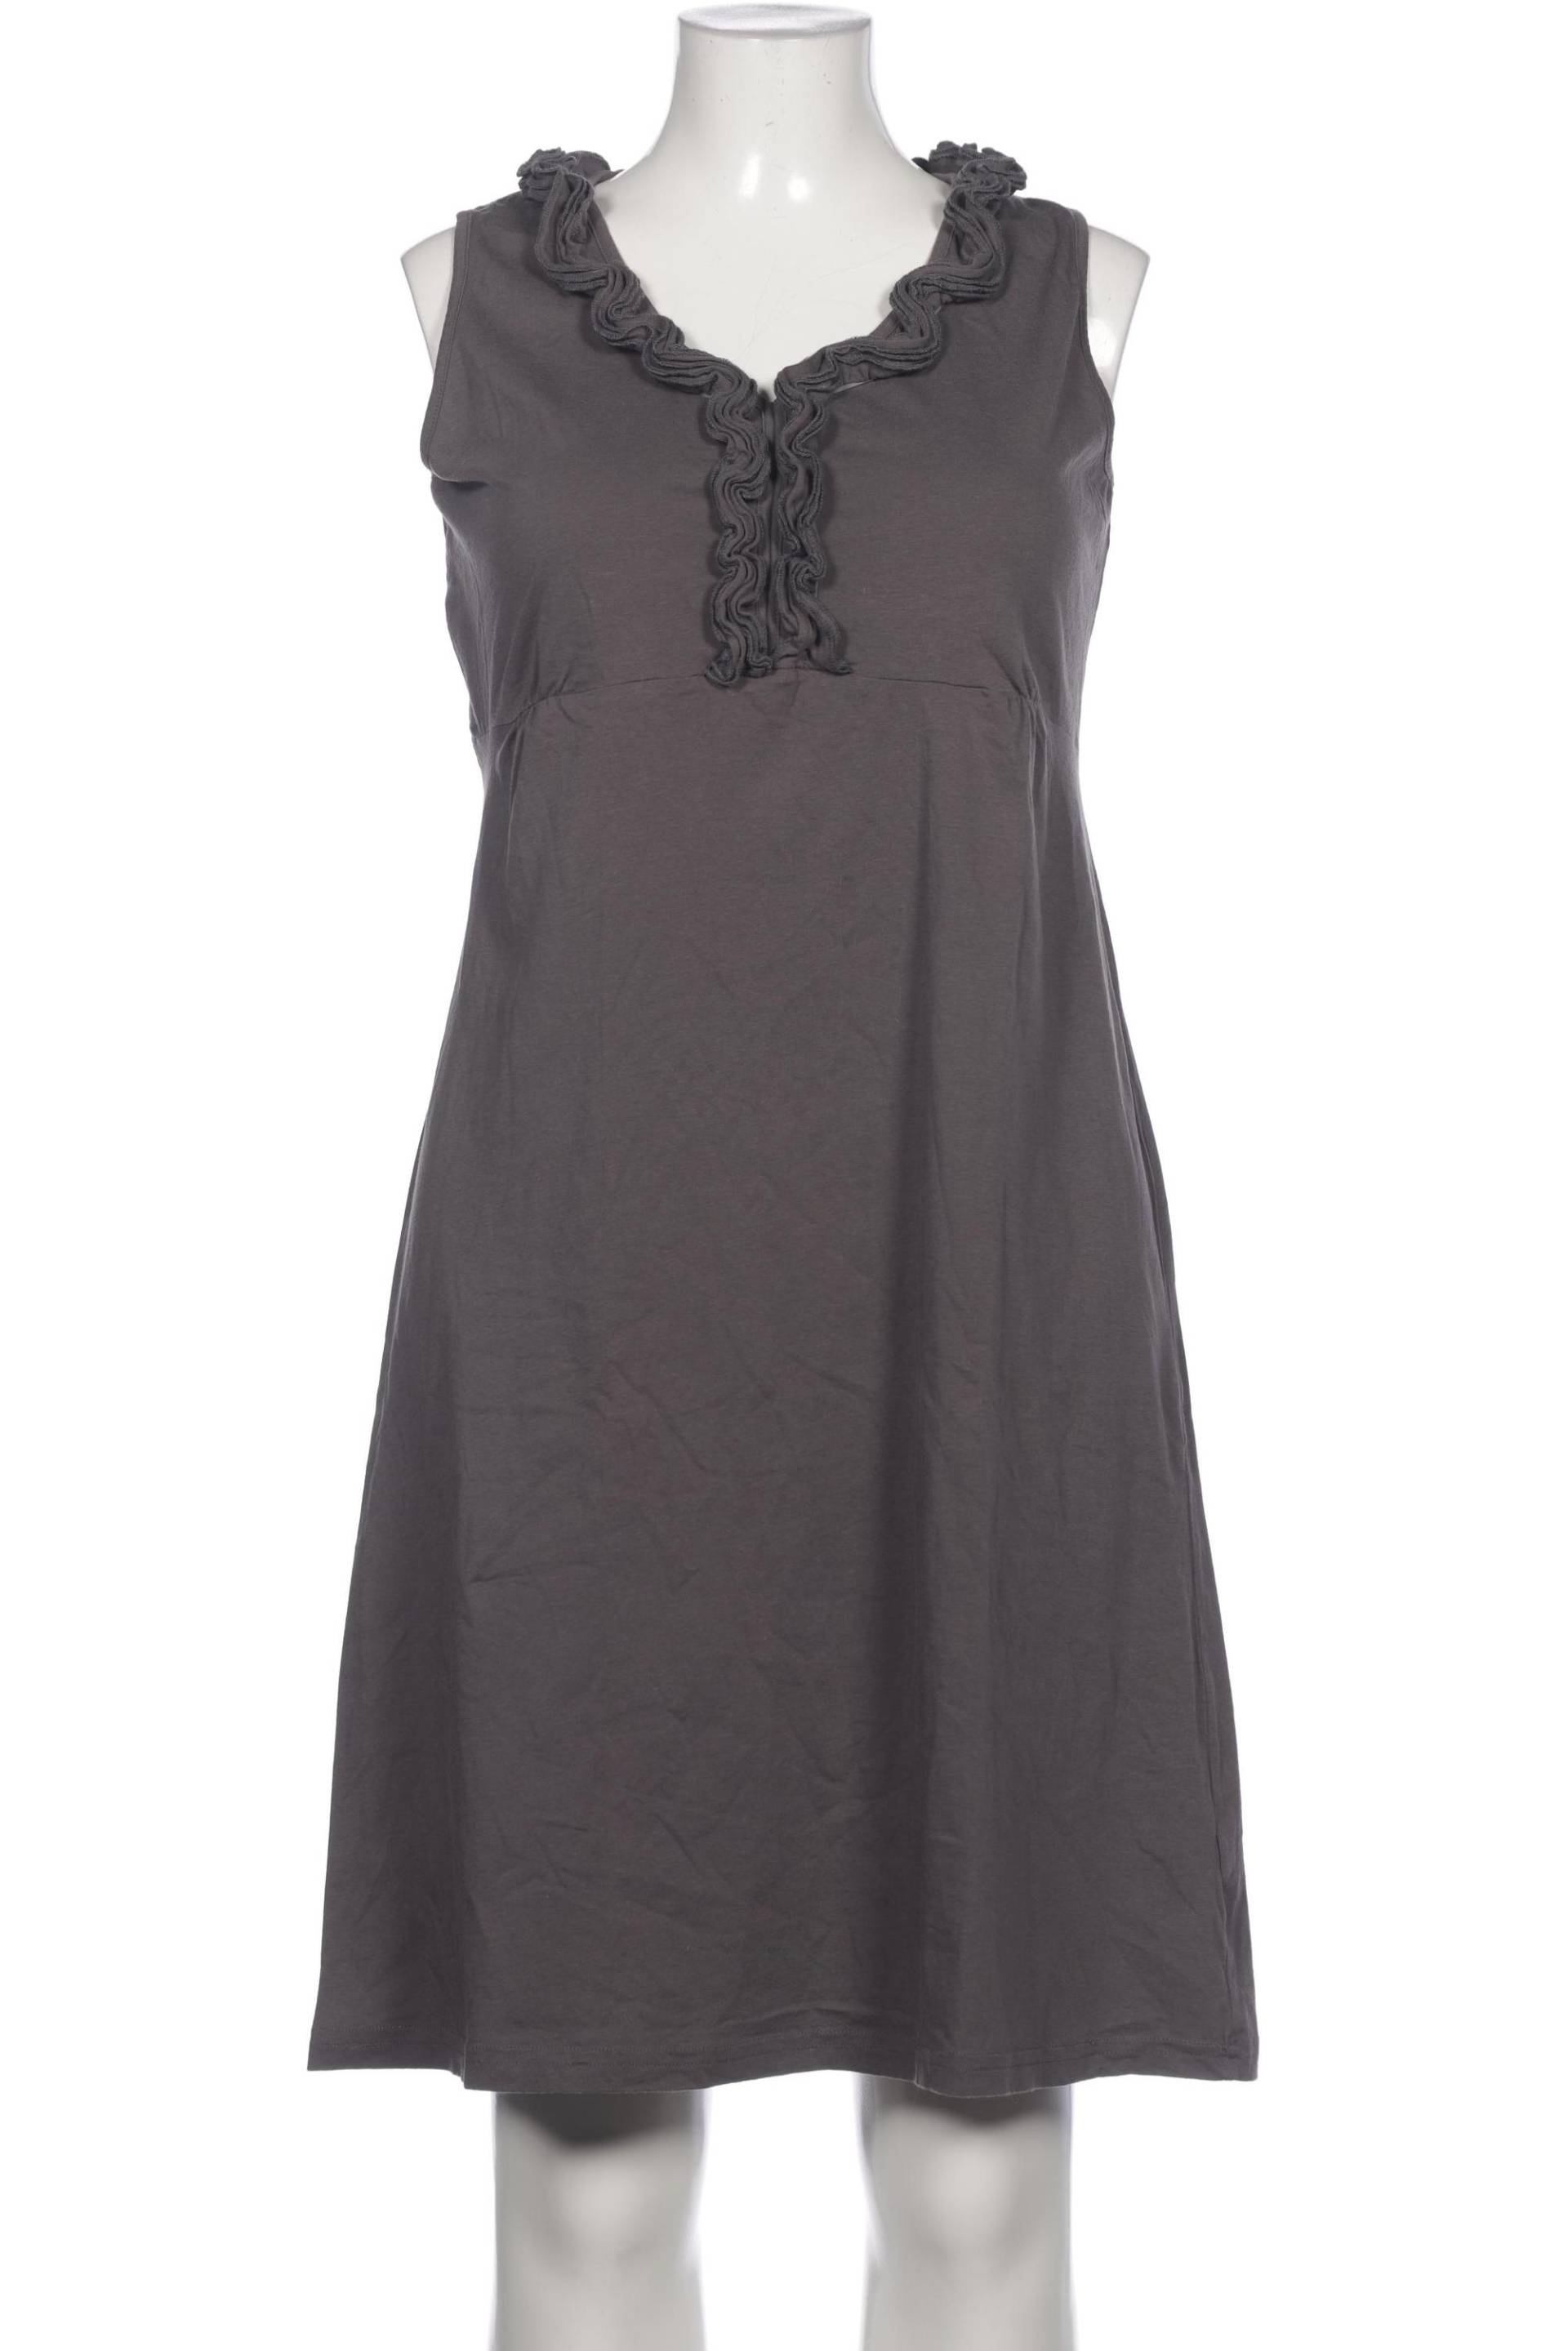 Maas Damen Kleid, grau, Gr. 44 von Maas